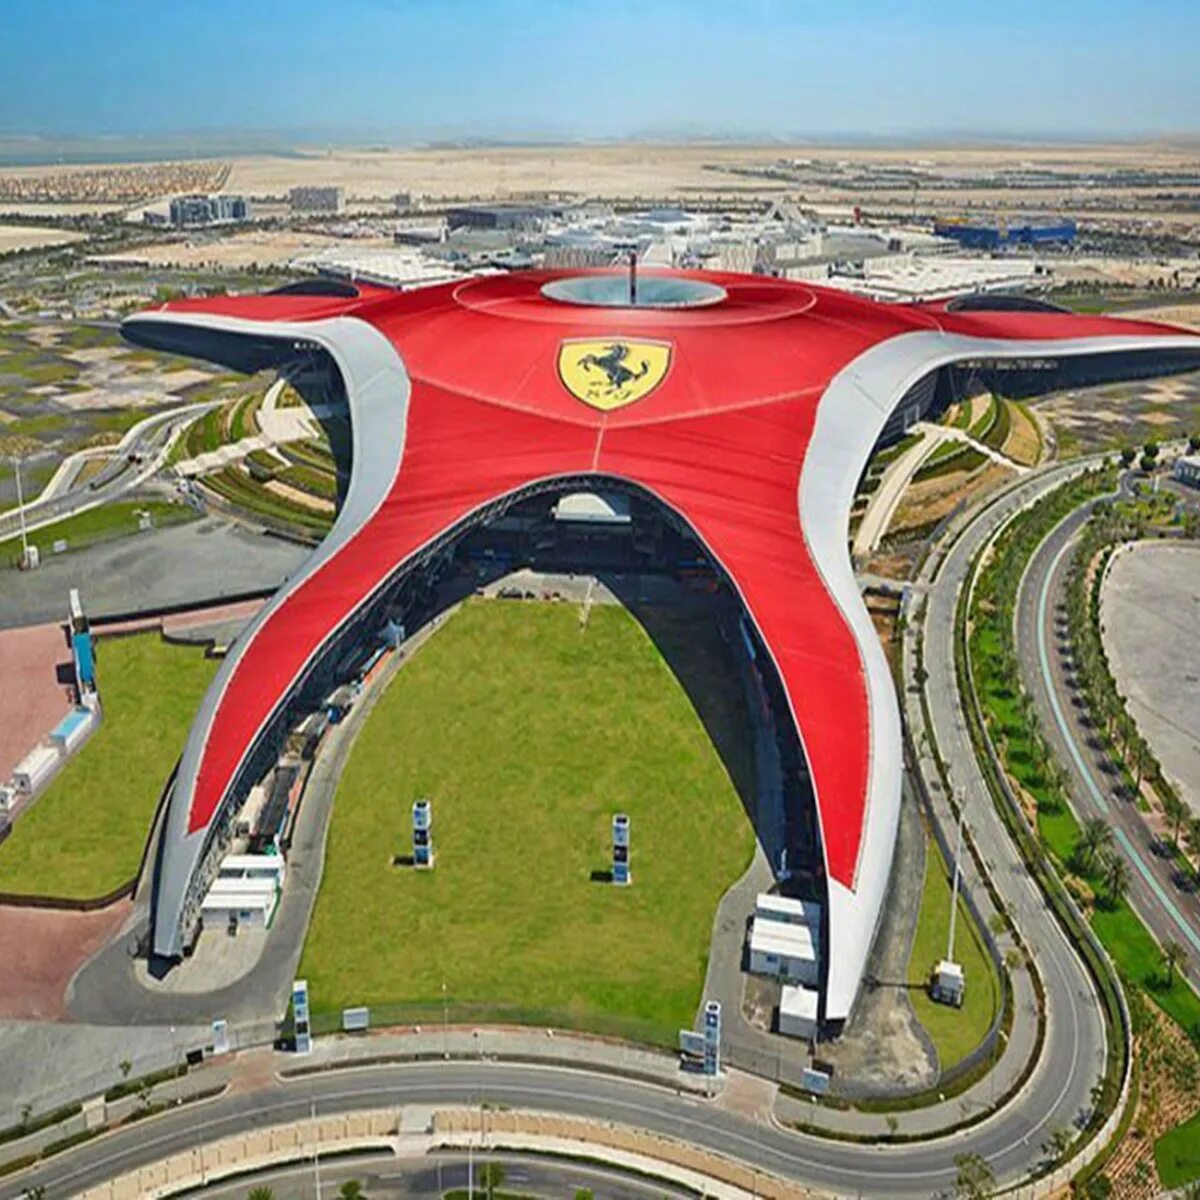 Парк феррари в дубае. Парк аттракционов Ferrari World в Абу-Даби. Феррари парк Дубай. Феррари парк Абу Даби аттракционы. Феррари парк Дубай аттракционы.